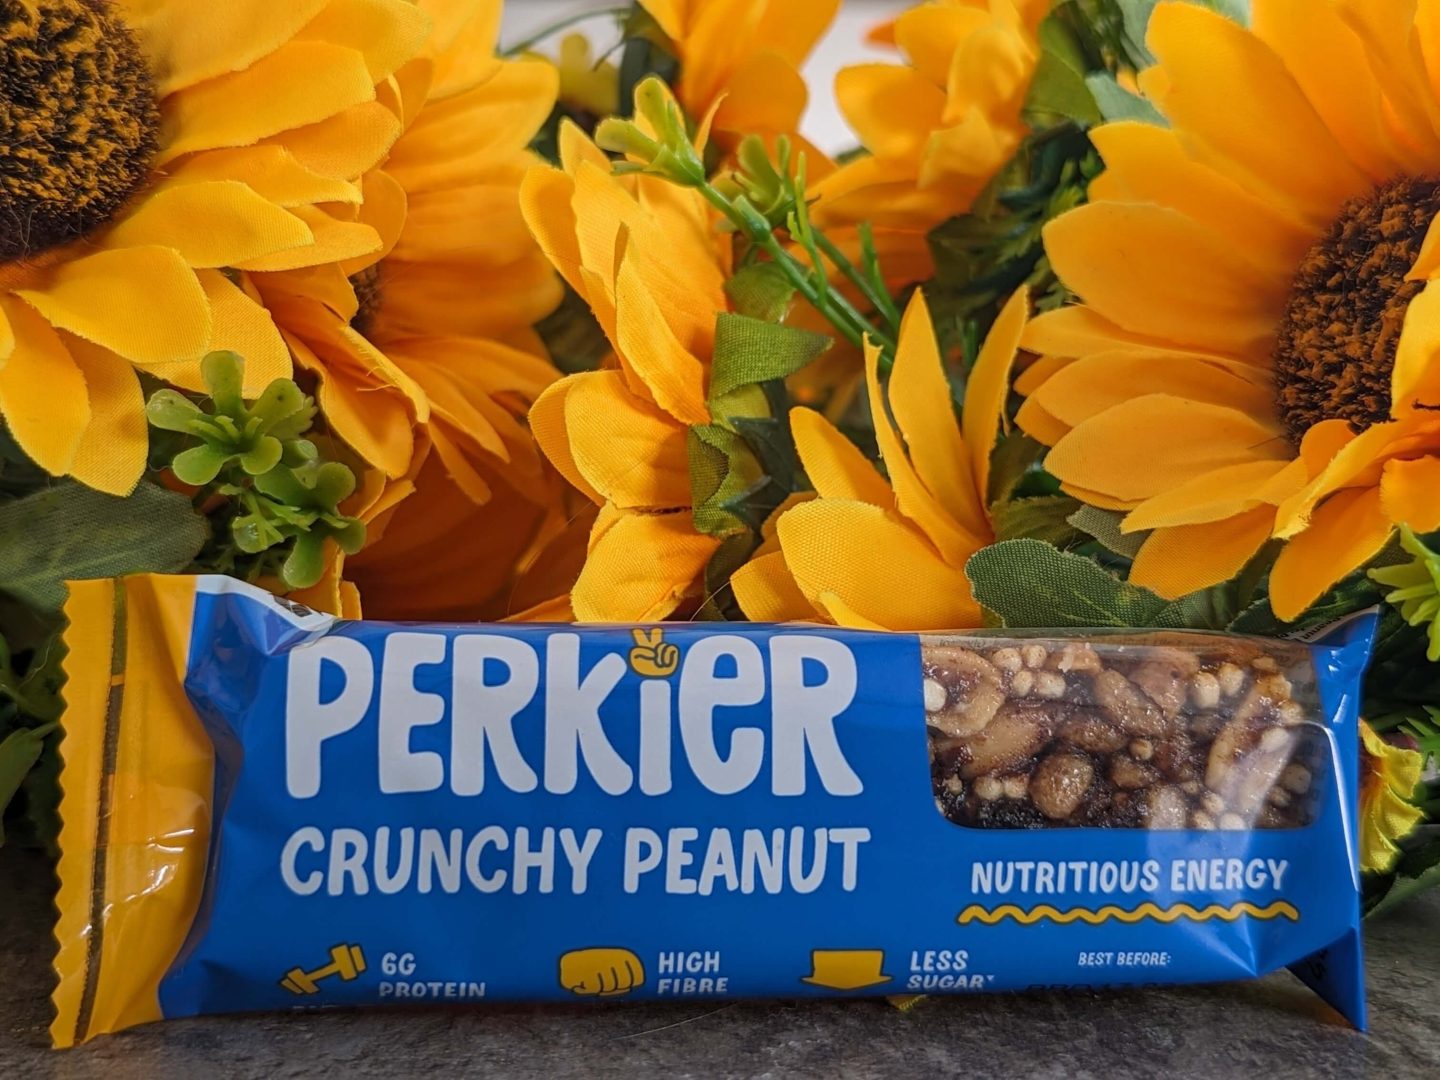 Perkier crunchy peanut bar displayed against a bunch of sunflowers.